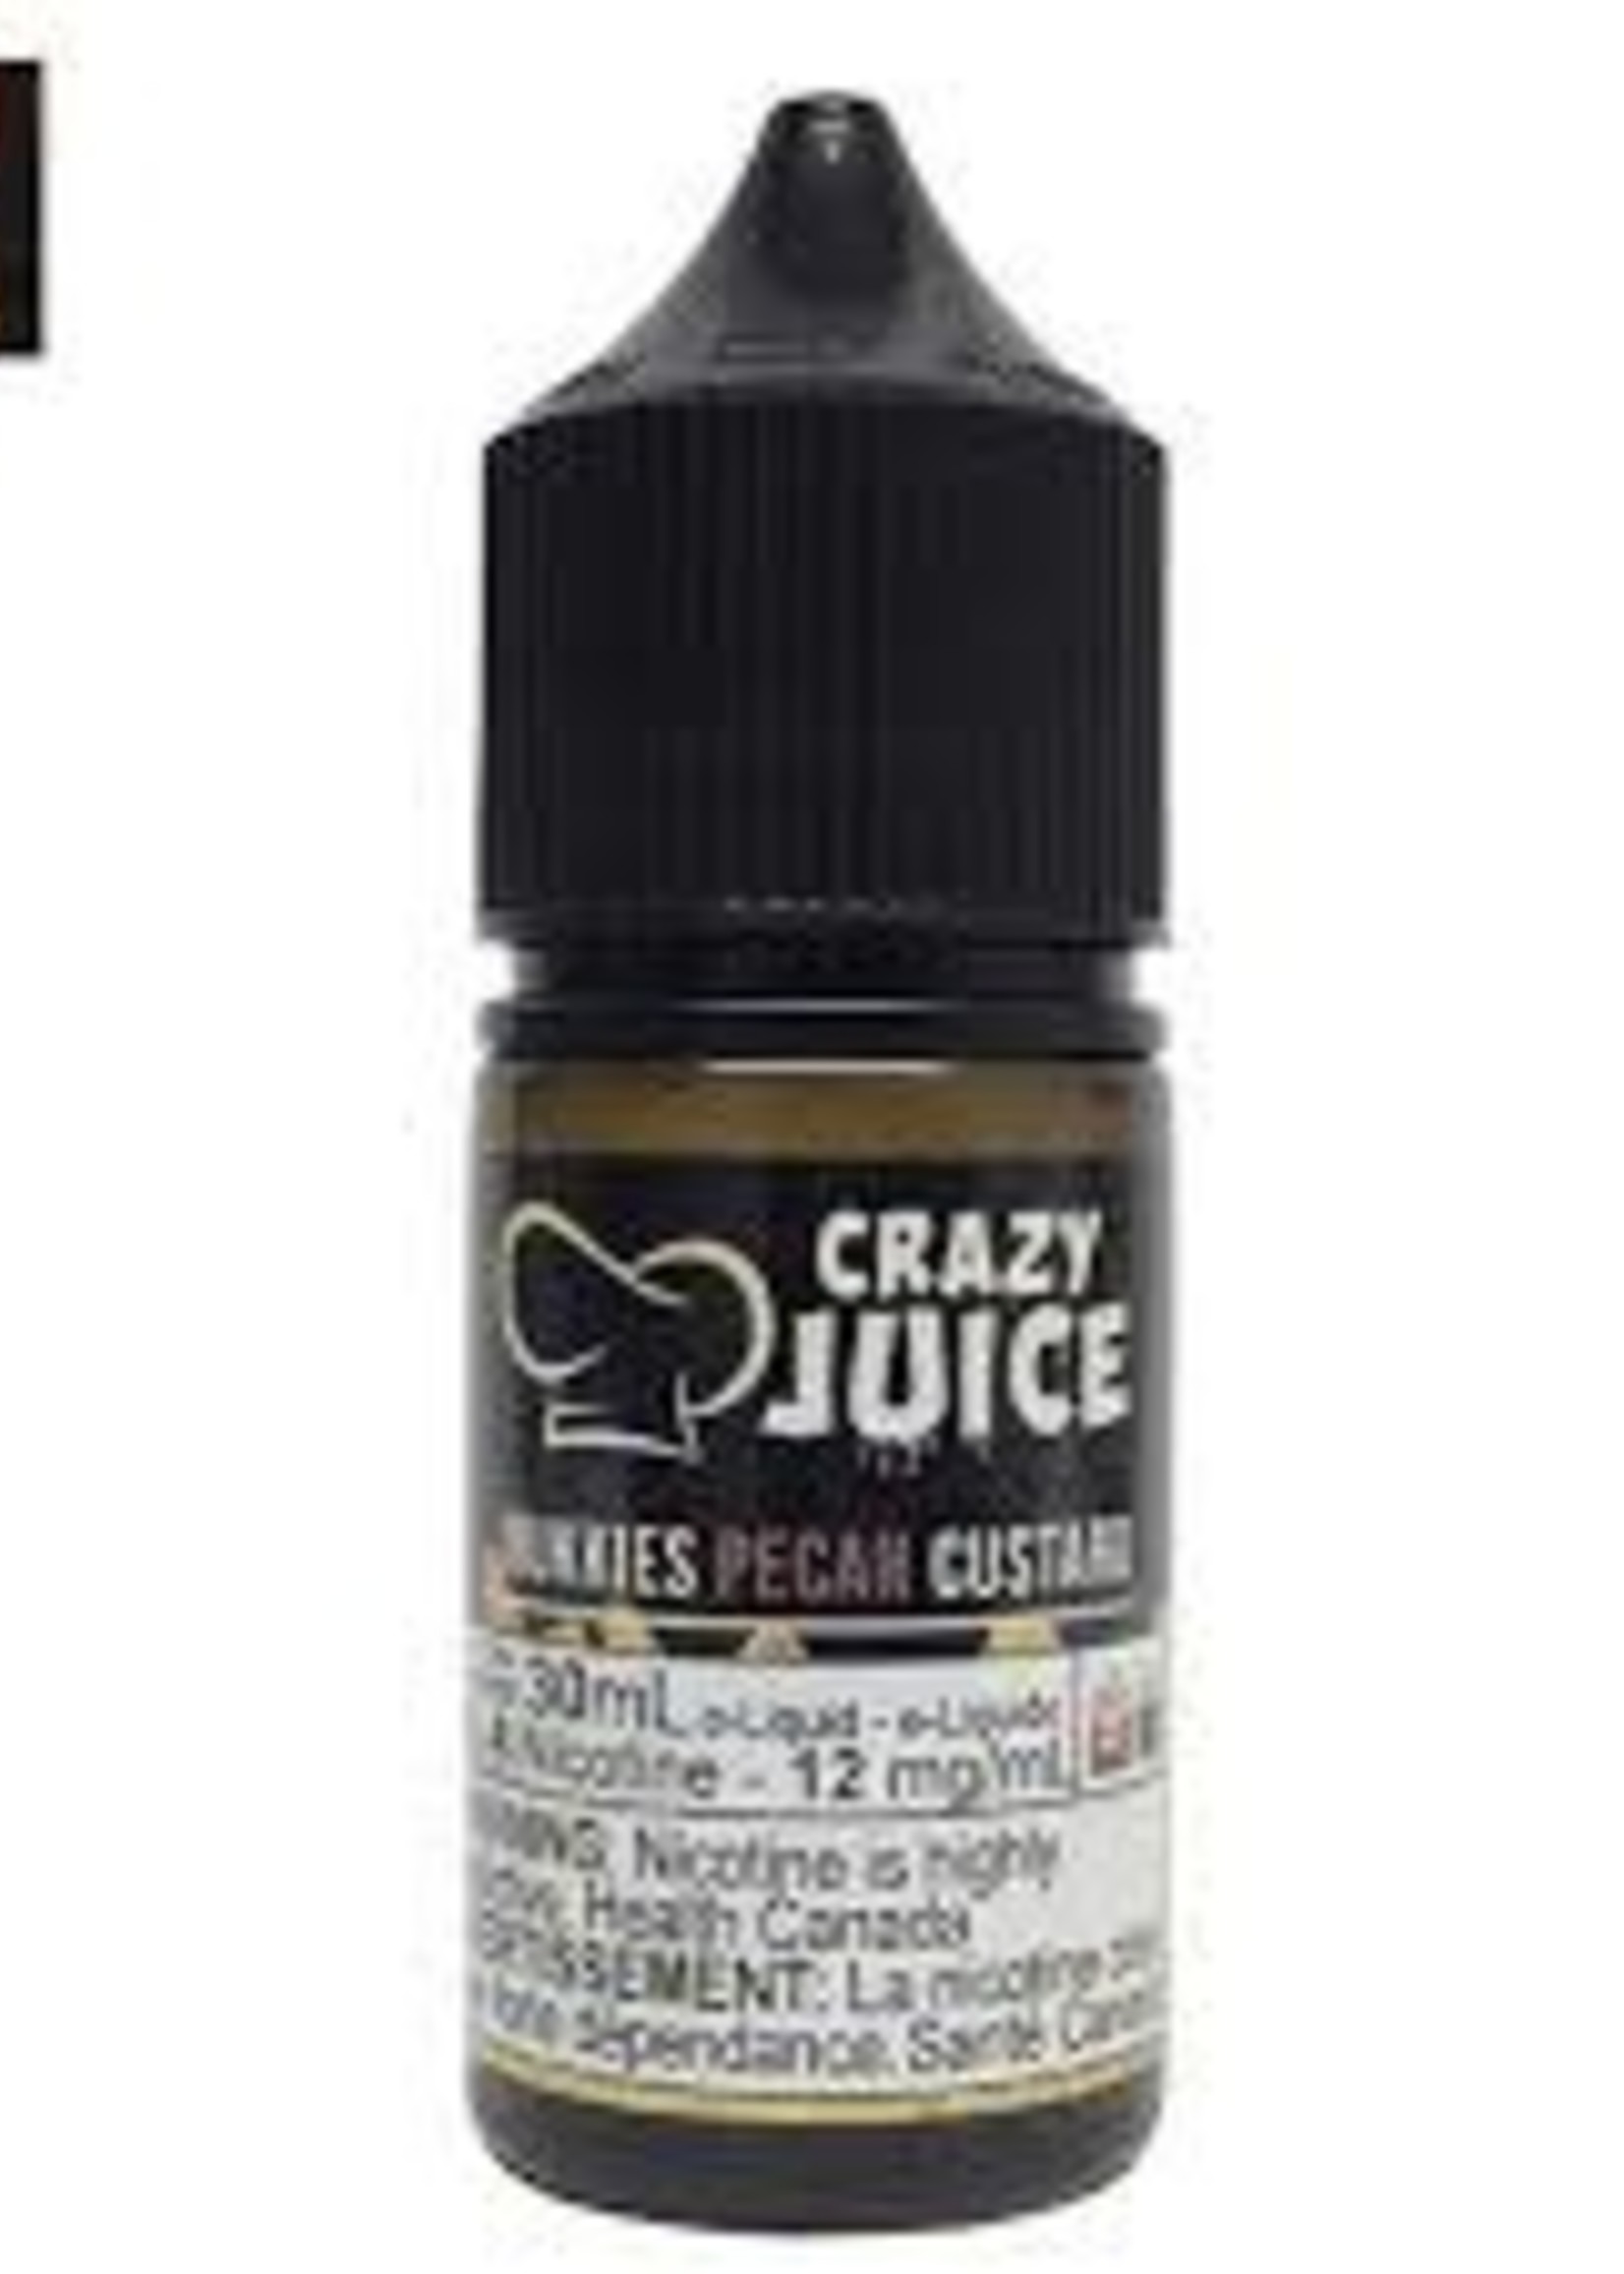 crazy juice Mukkies Pecan Custard Salt